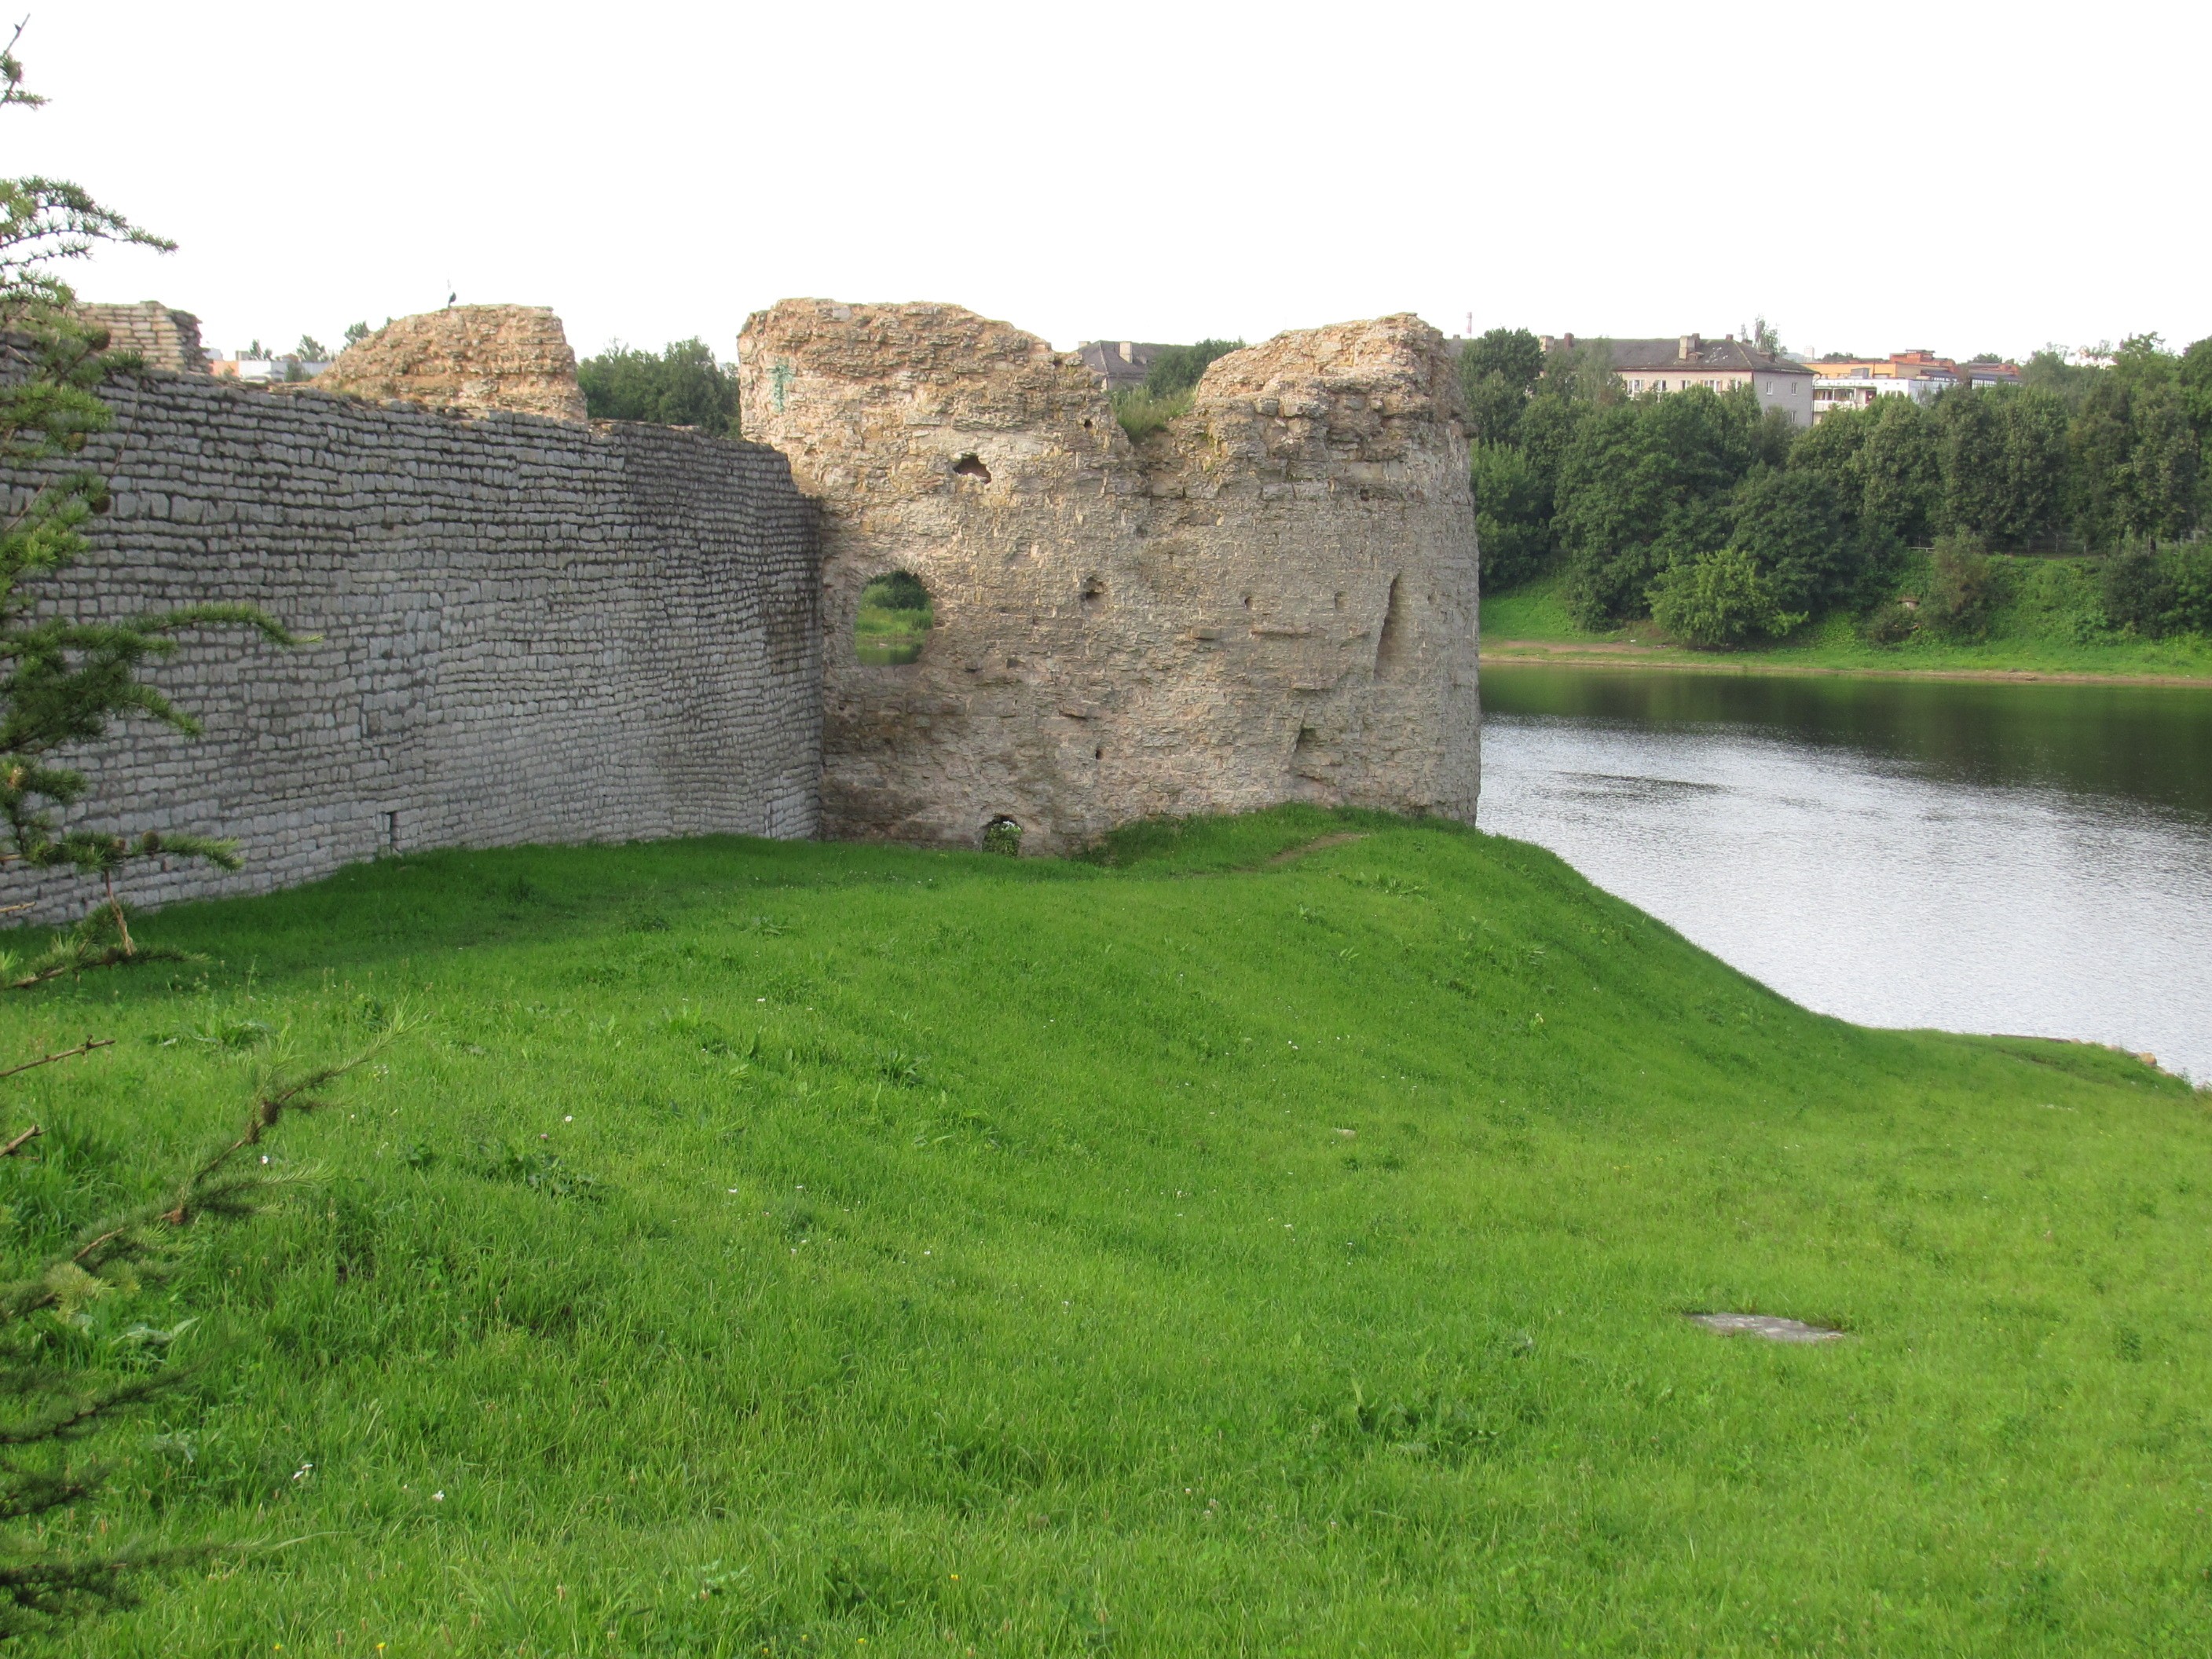 Псковская крепость - Варлаамская наугольная башня